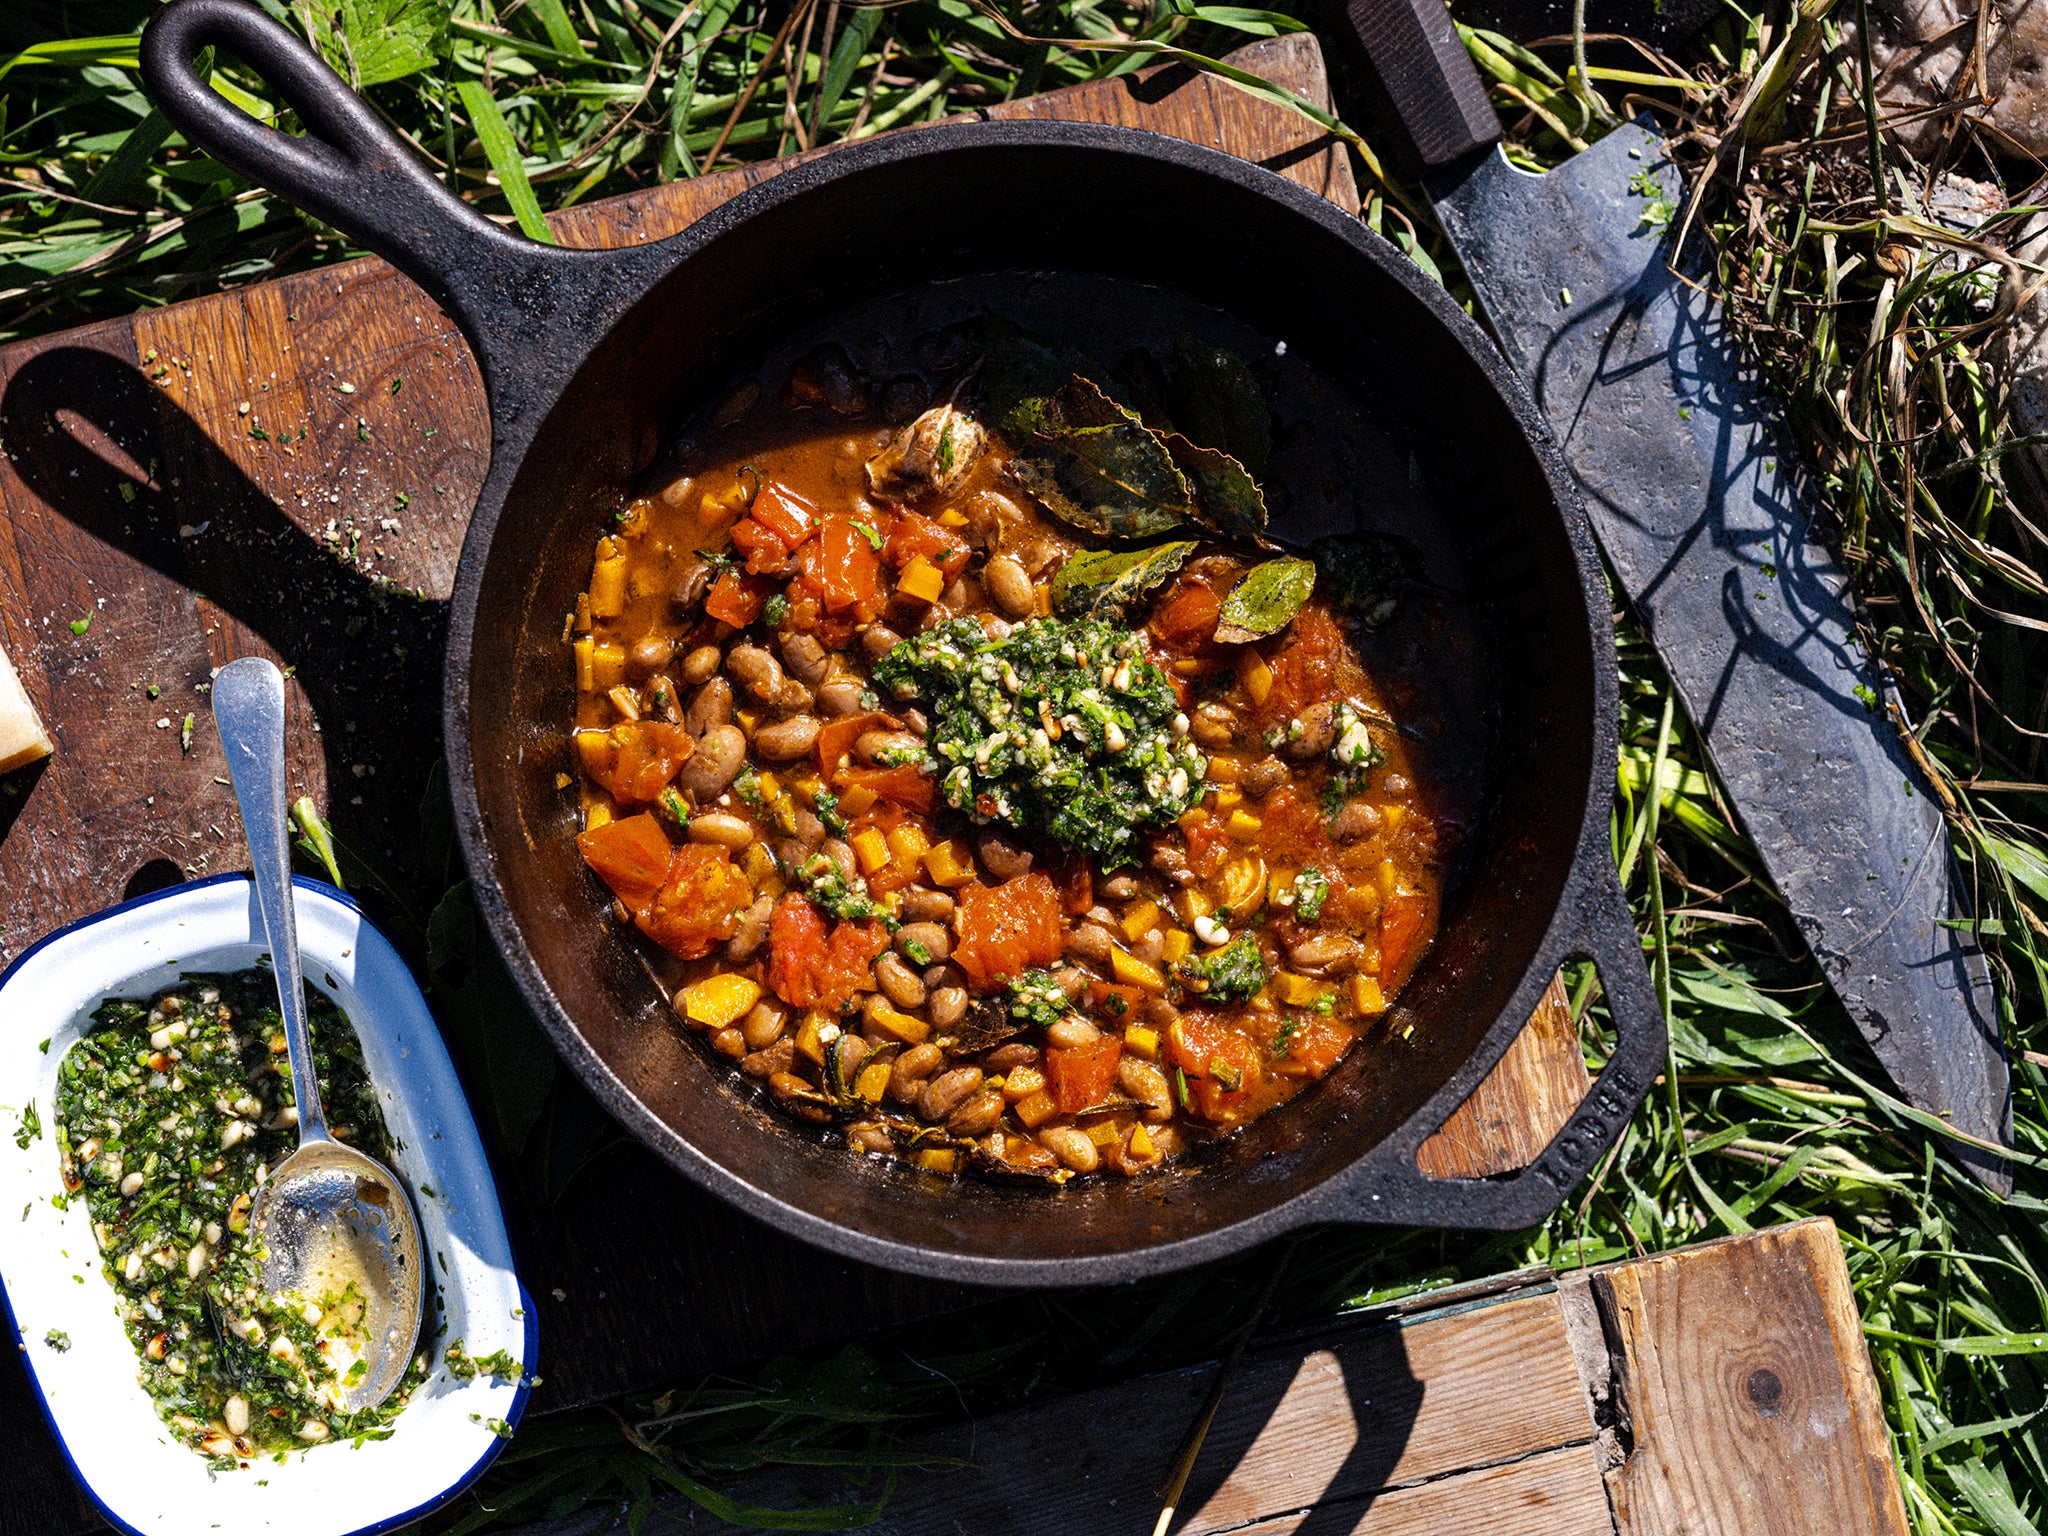 Carrot top pesto boosts the flavour of this borlotti bean stew, while also saving waste